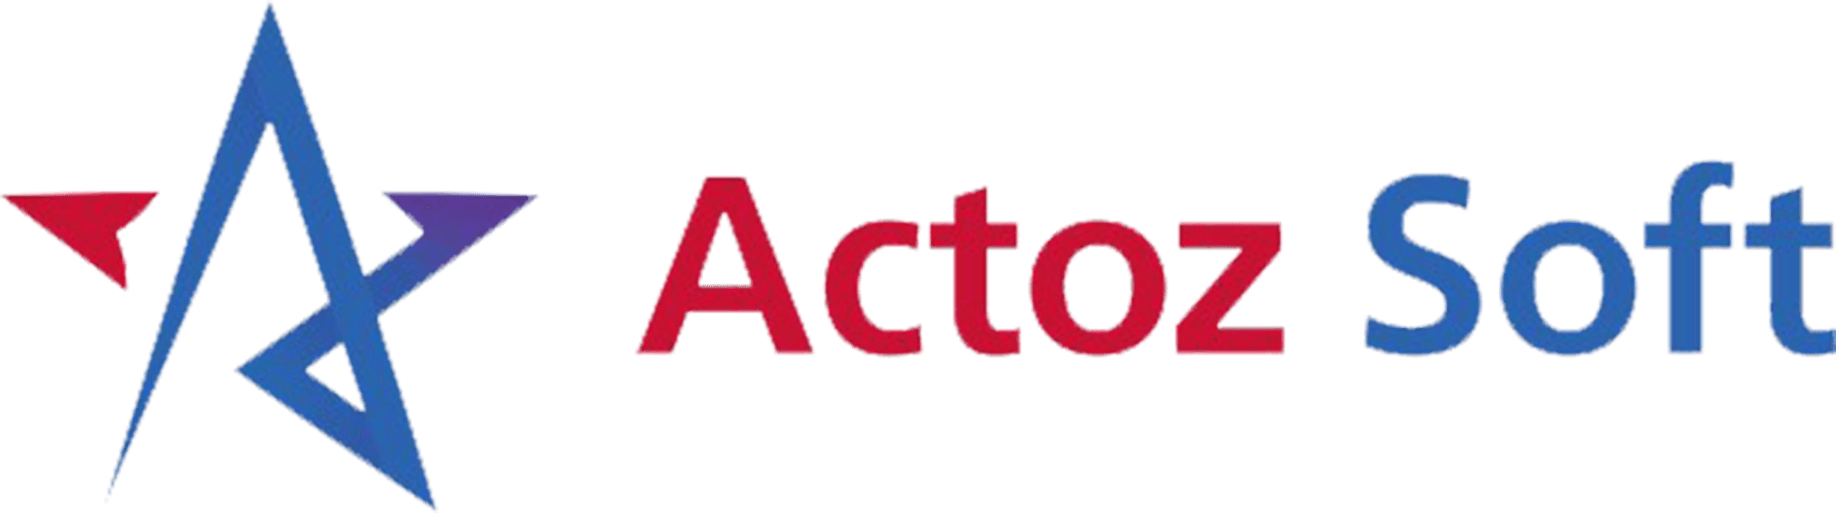 Actoz Soft | Lead investor